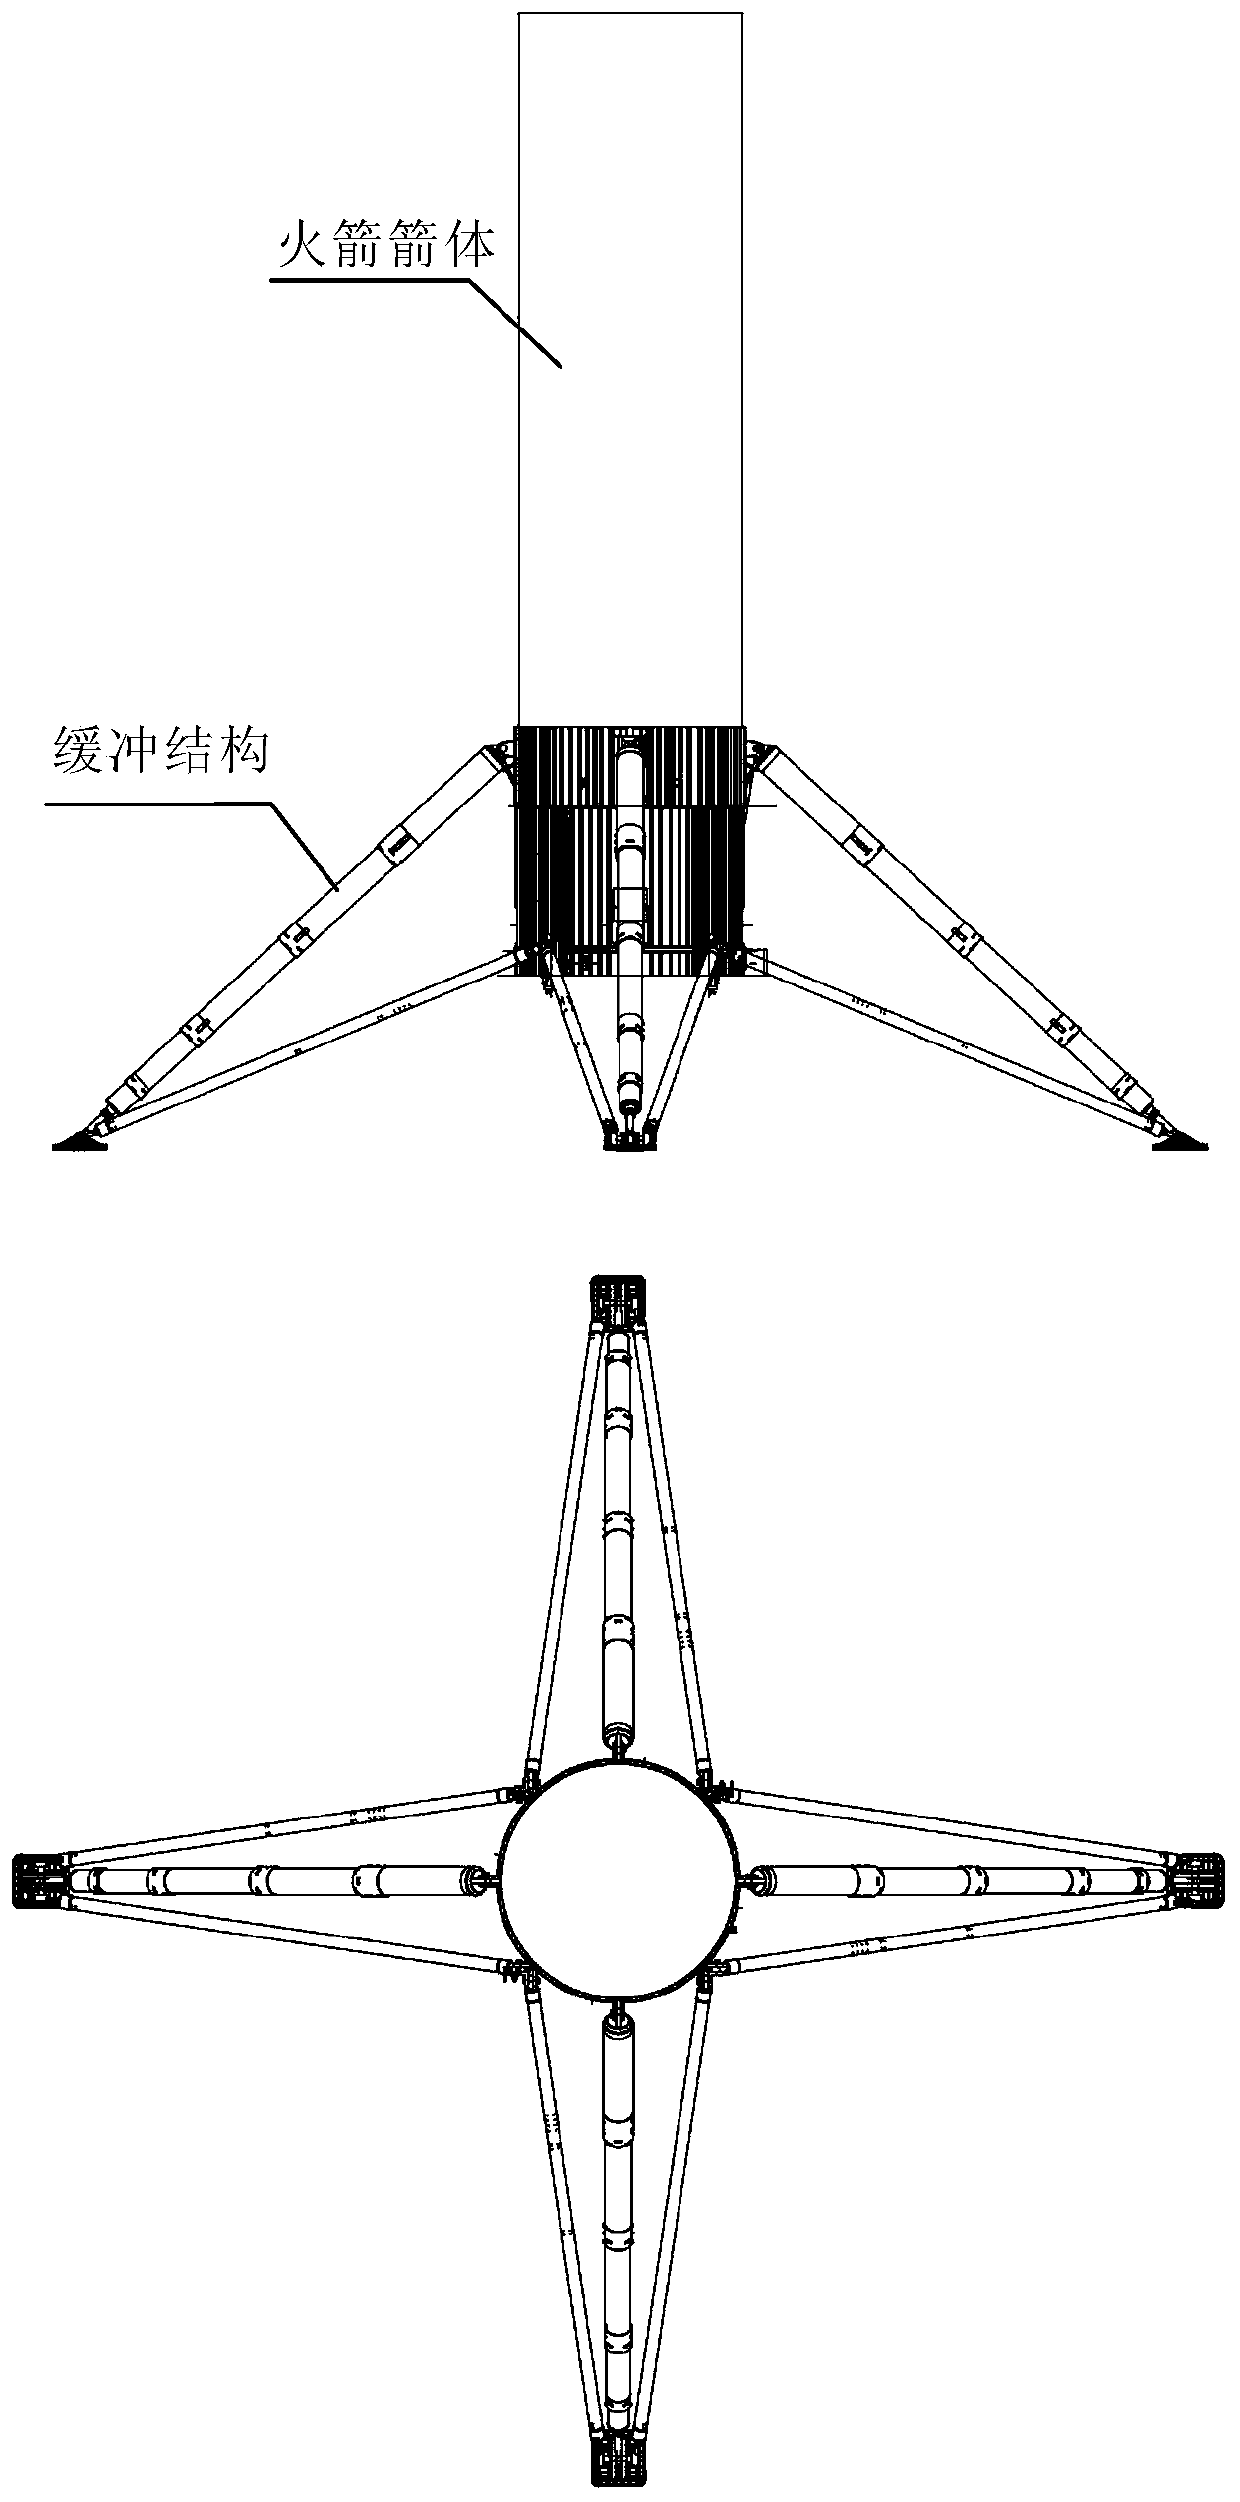 Large-span foldable reusable rocket landing buffer structure